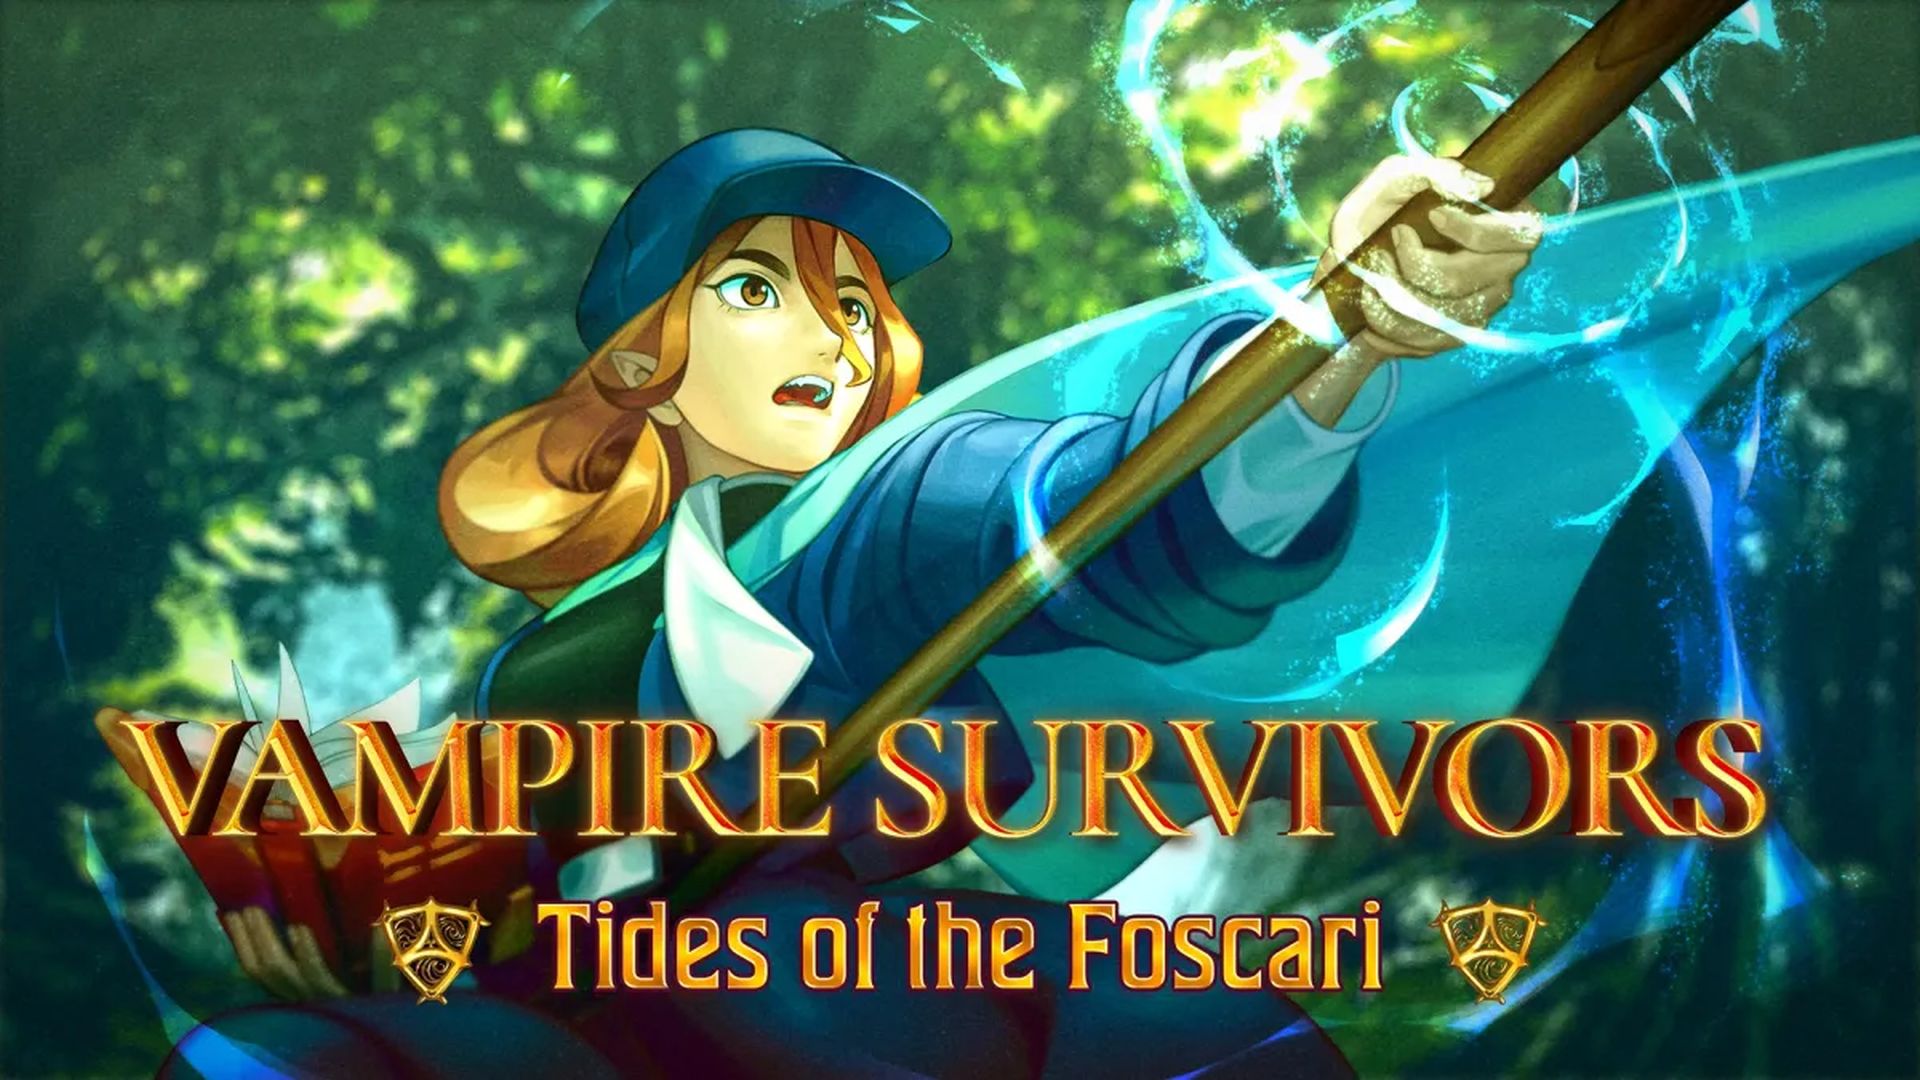 Vampire Survivors: Tales of the Foscari DLC Releases on April 13th